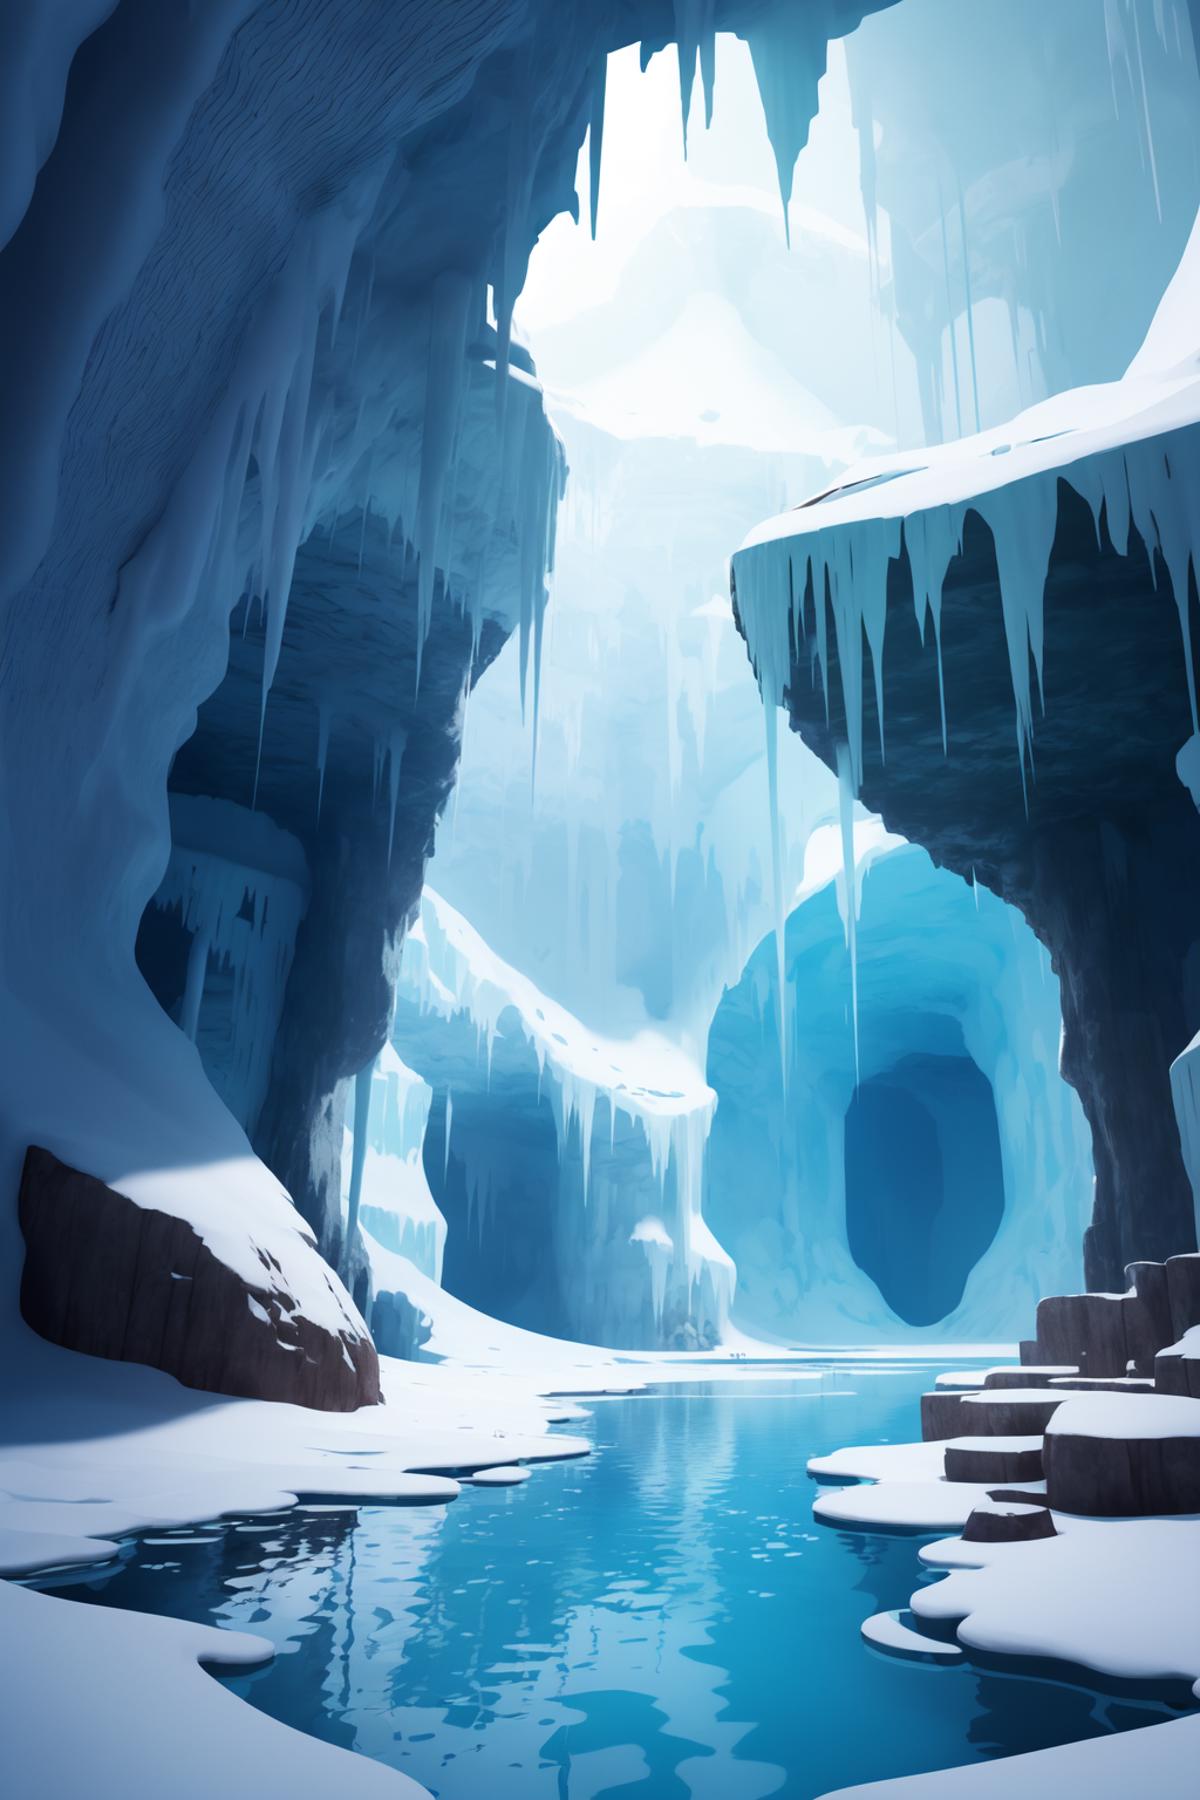 Ice Age image by LDWorksDavid